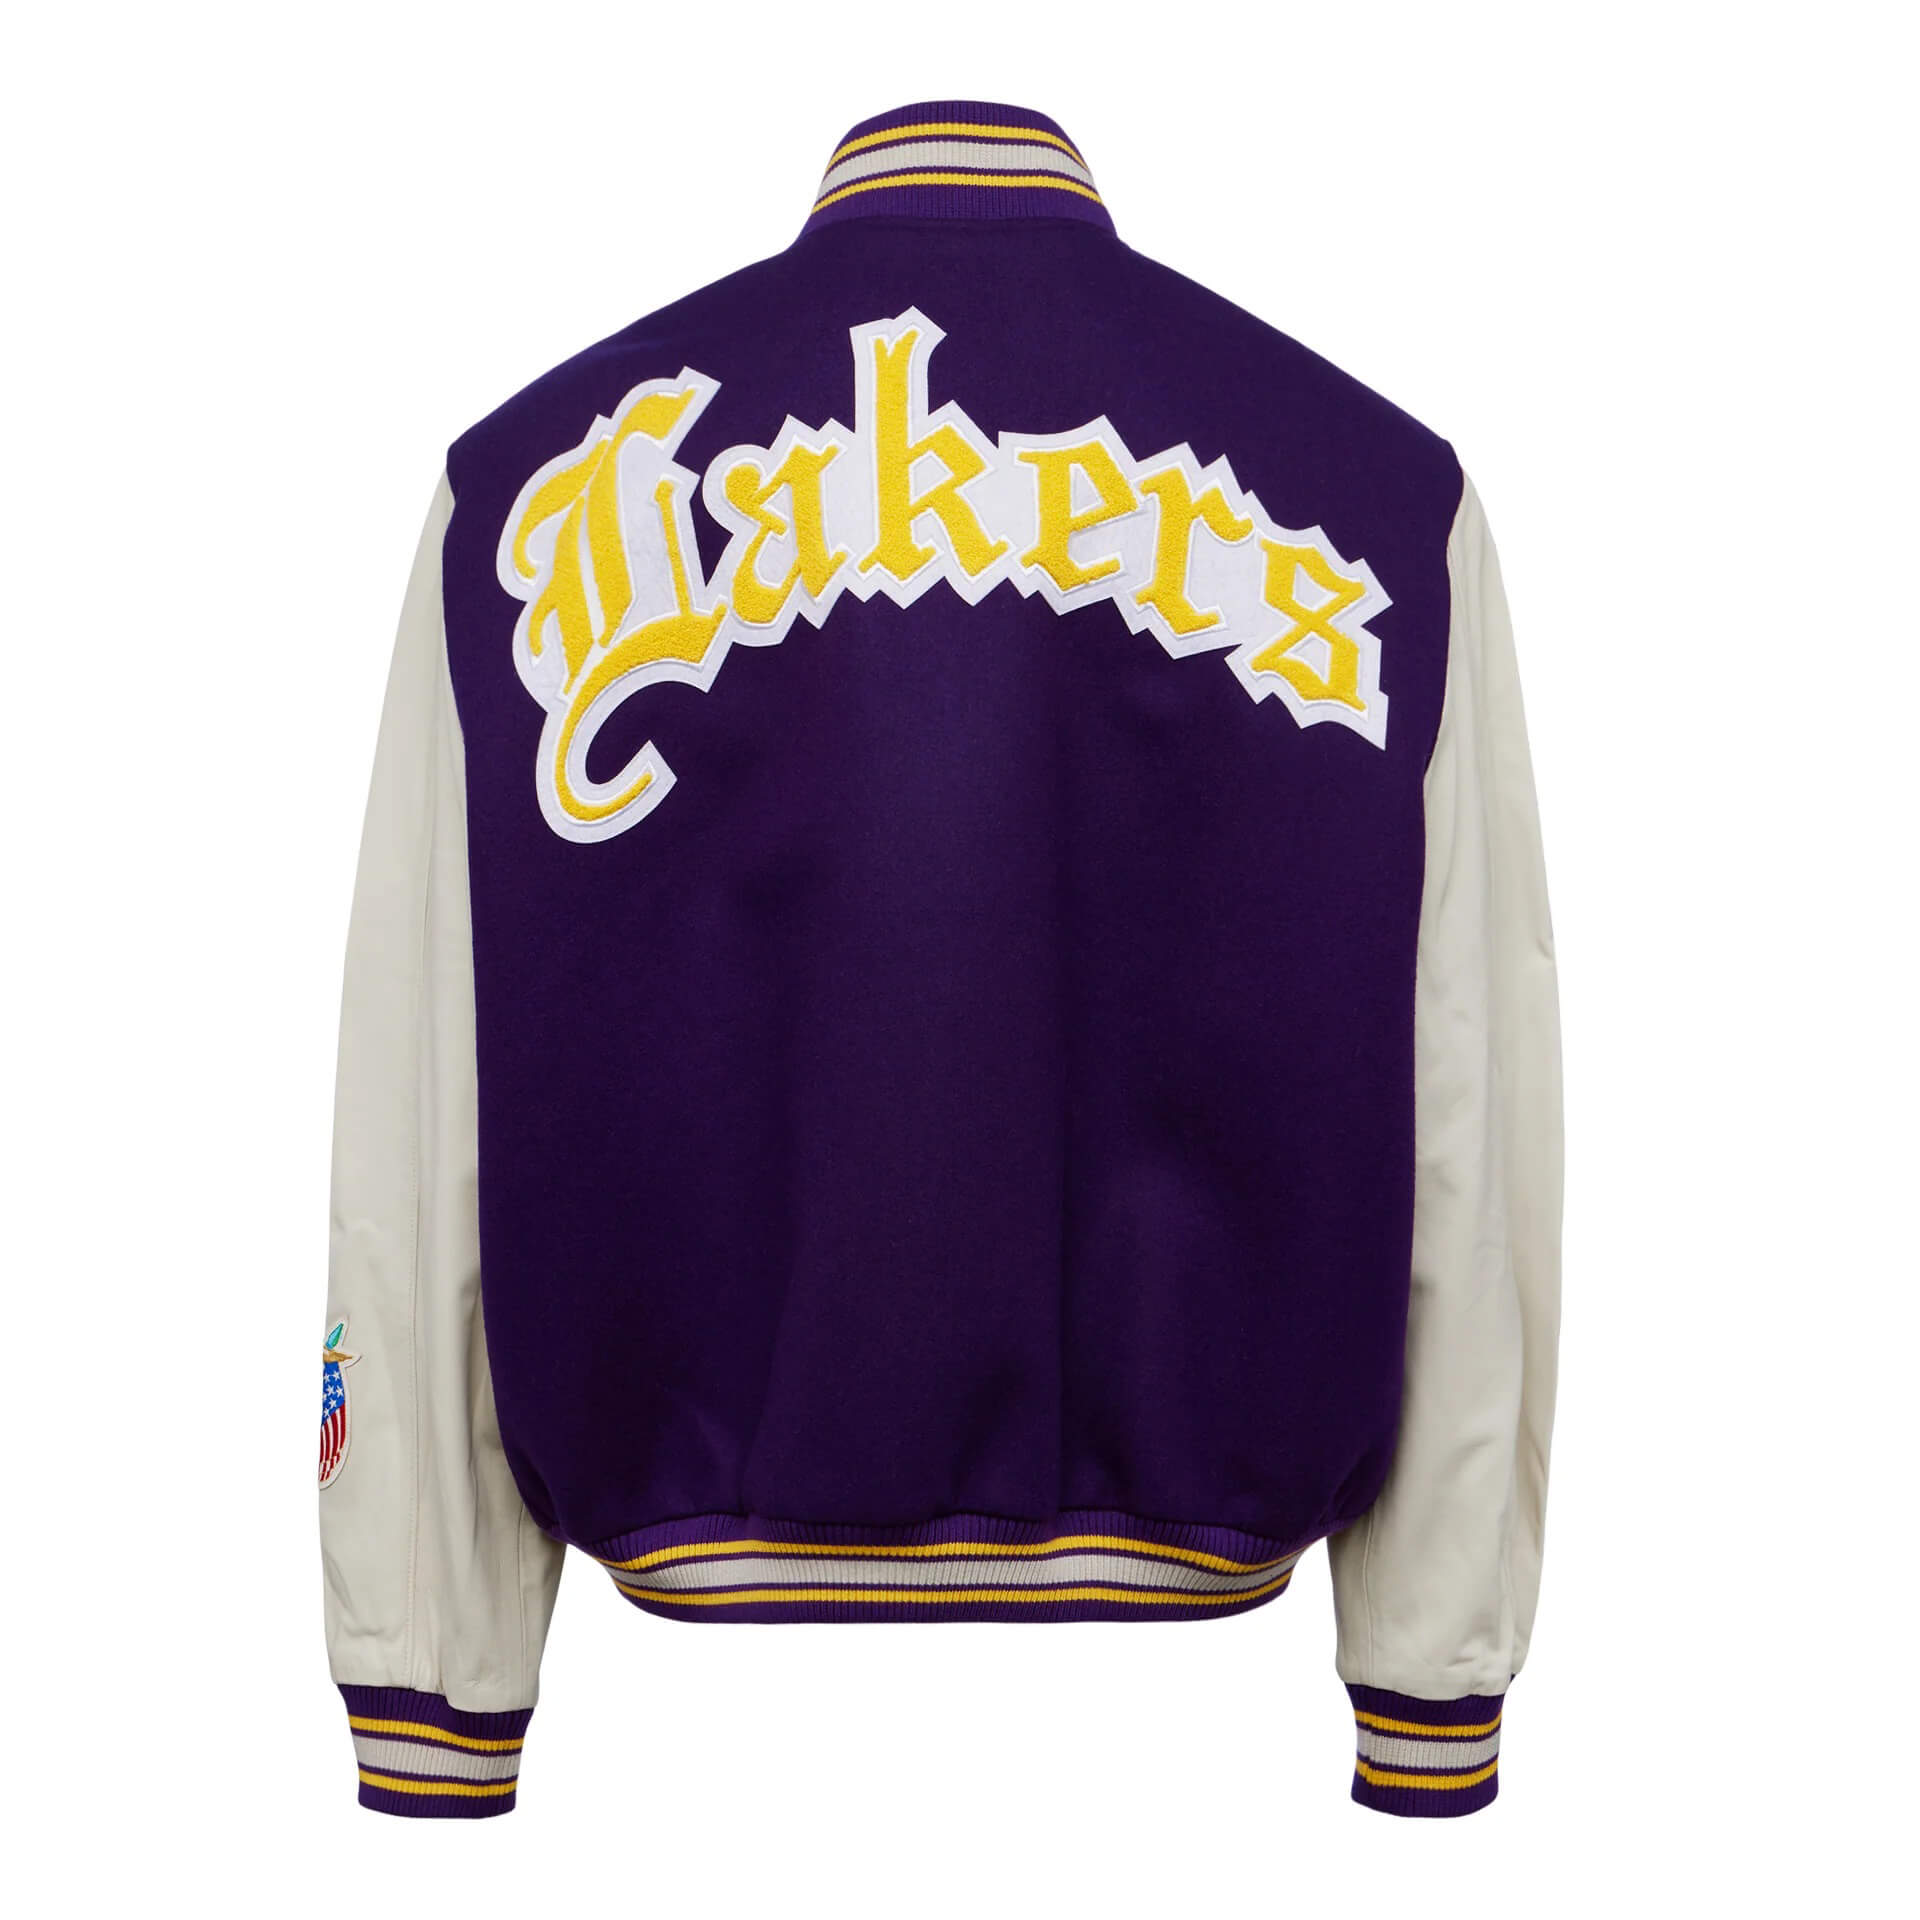 NBA La Lakers Black and White Varsity Jacket